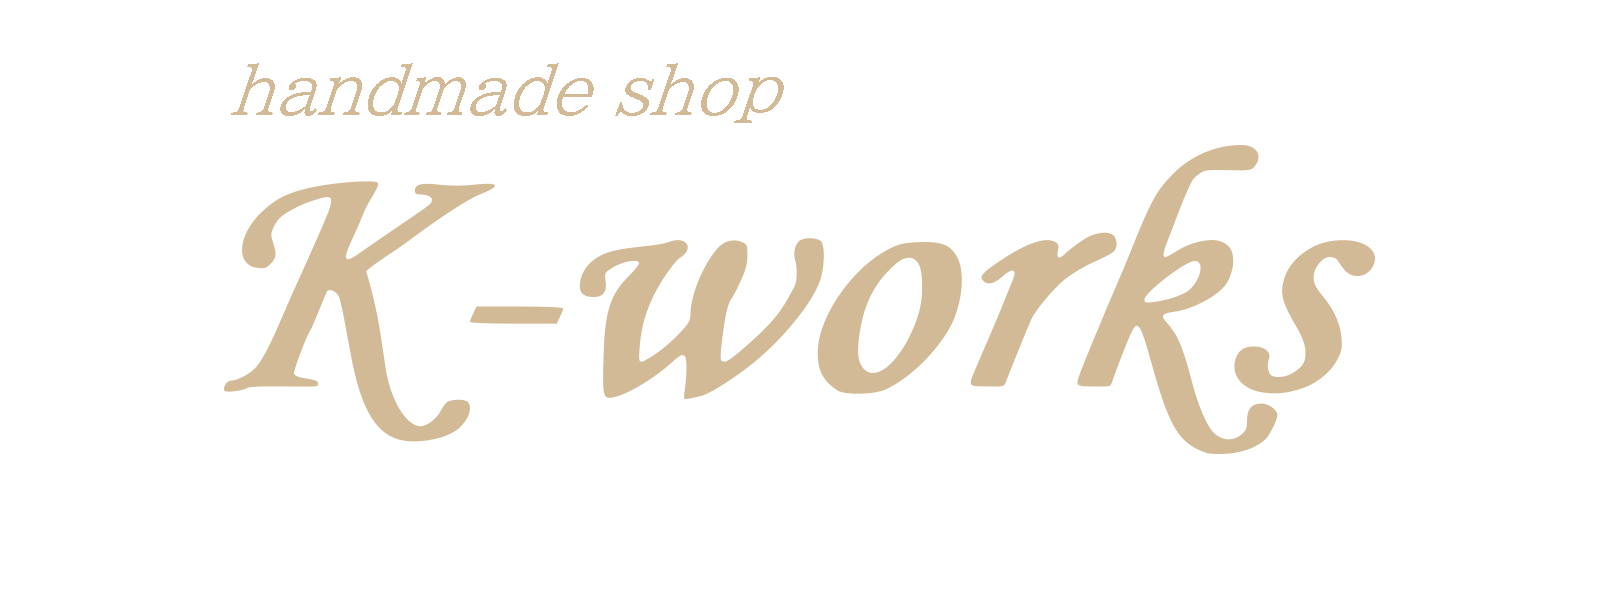 handmade shop K-works